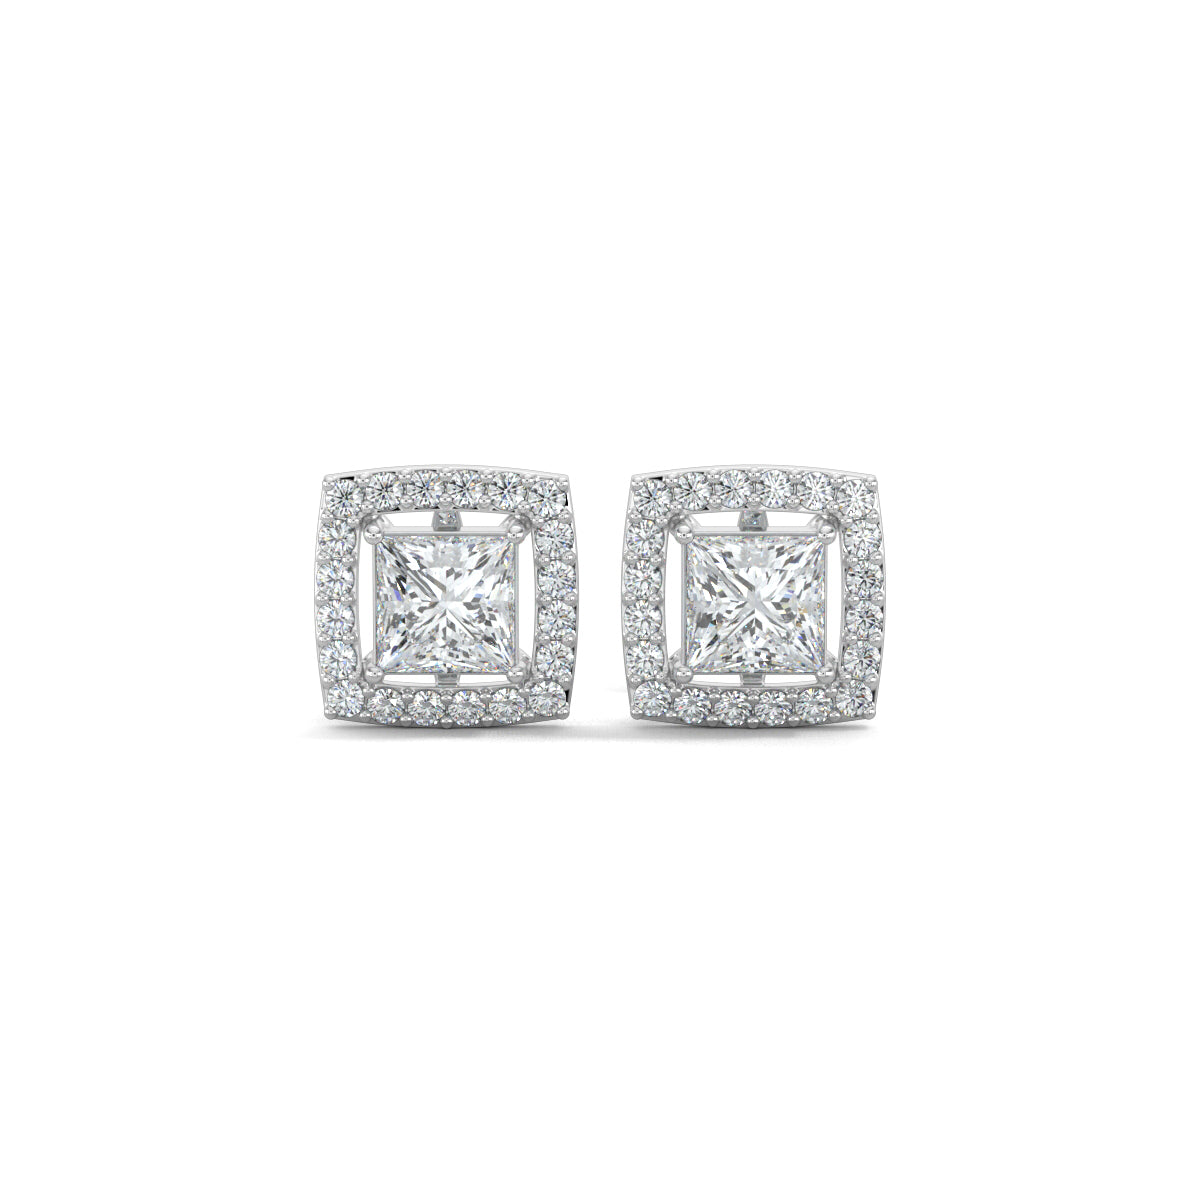 White Gold, Diamond Earrings, Luxe Square Stud Earrings, Lab-Grown Diamonds, Princess Cut Diamond, Pave Setting, Square Shape, Elegant Jewelry, Sophisticated Accessories.